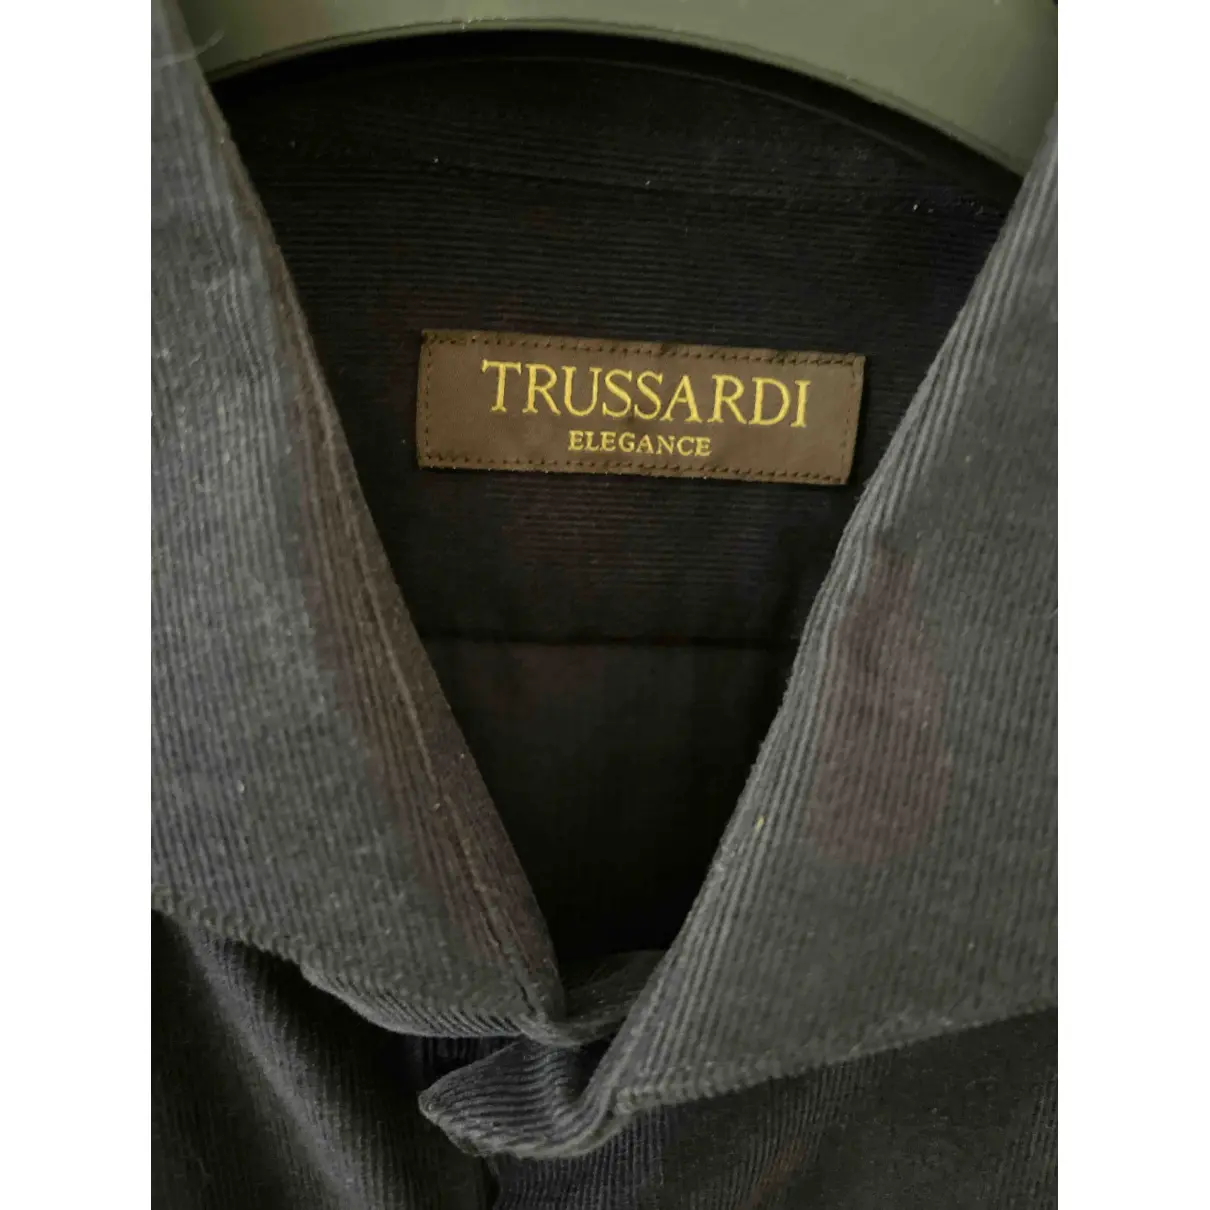 Buy Trussardi Shirt online